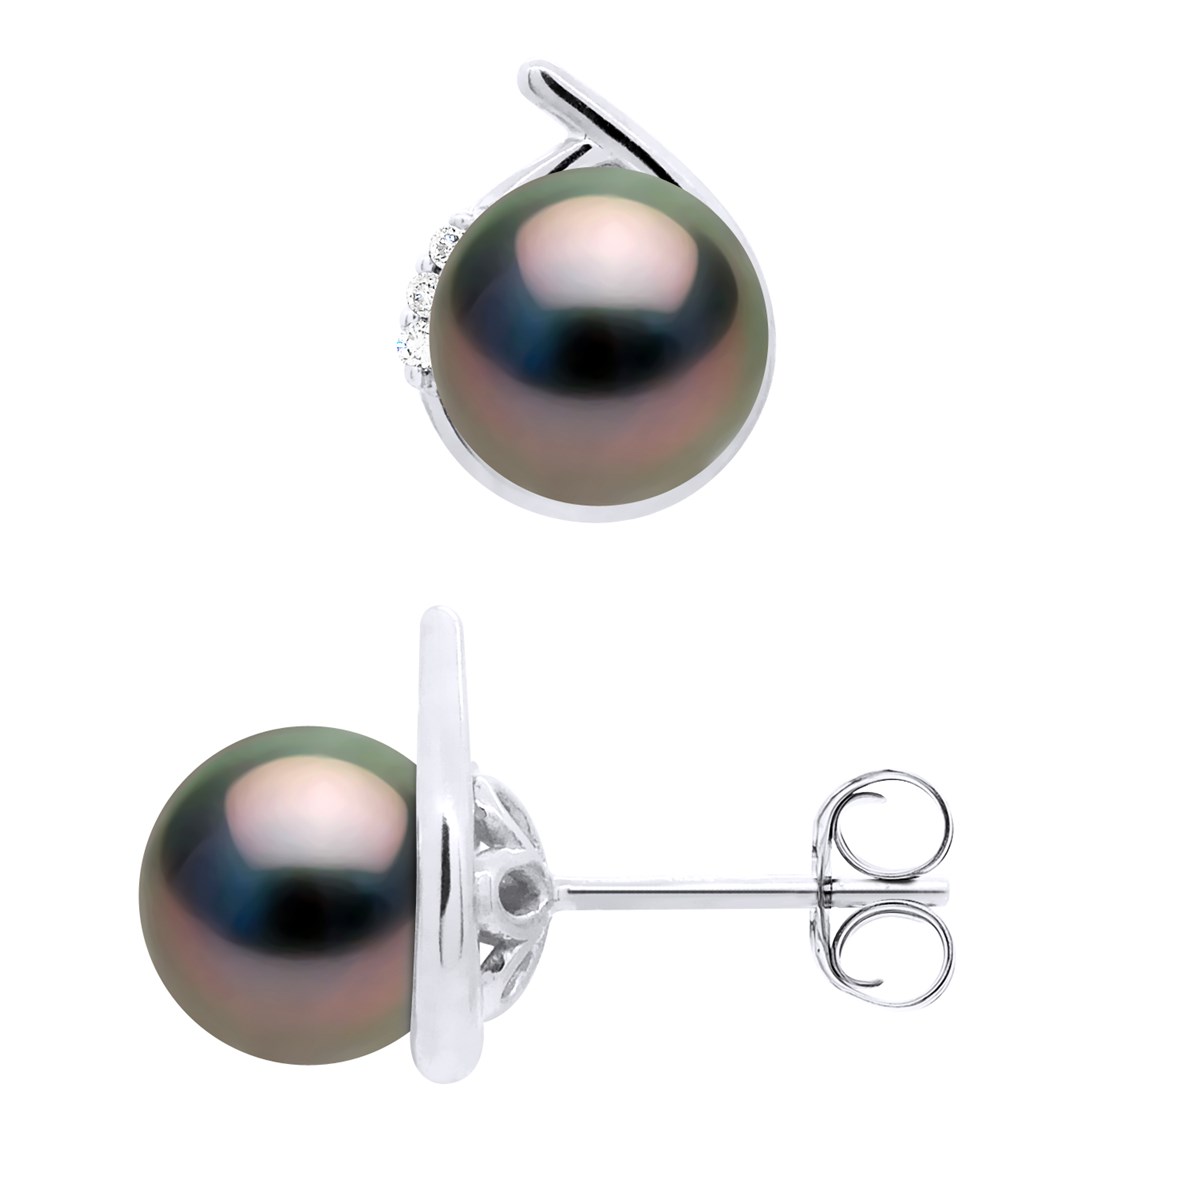 STELLA - Boucles d'Oreilles Perles de Tahiti & Diamant - Or Jaune